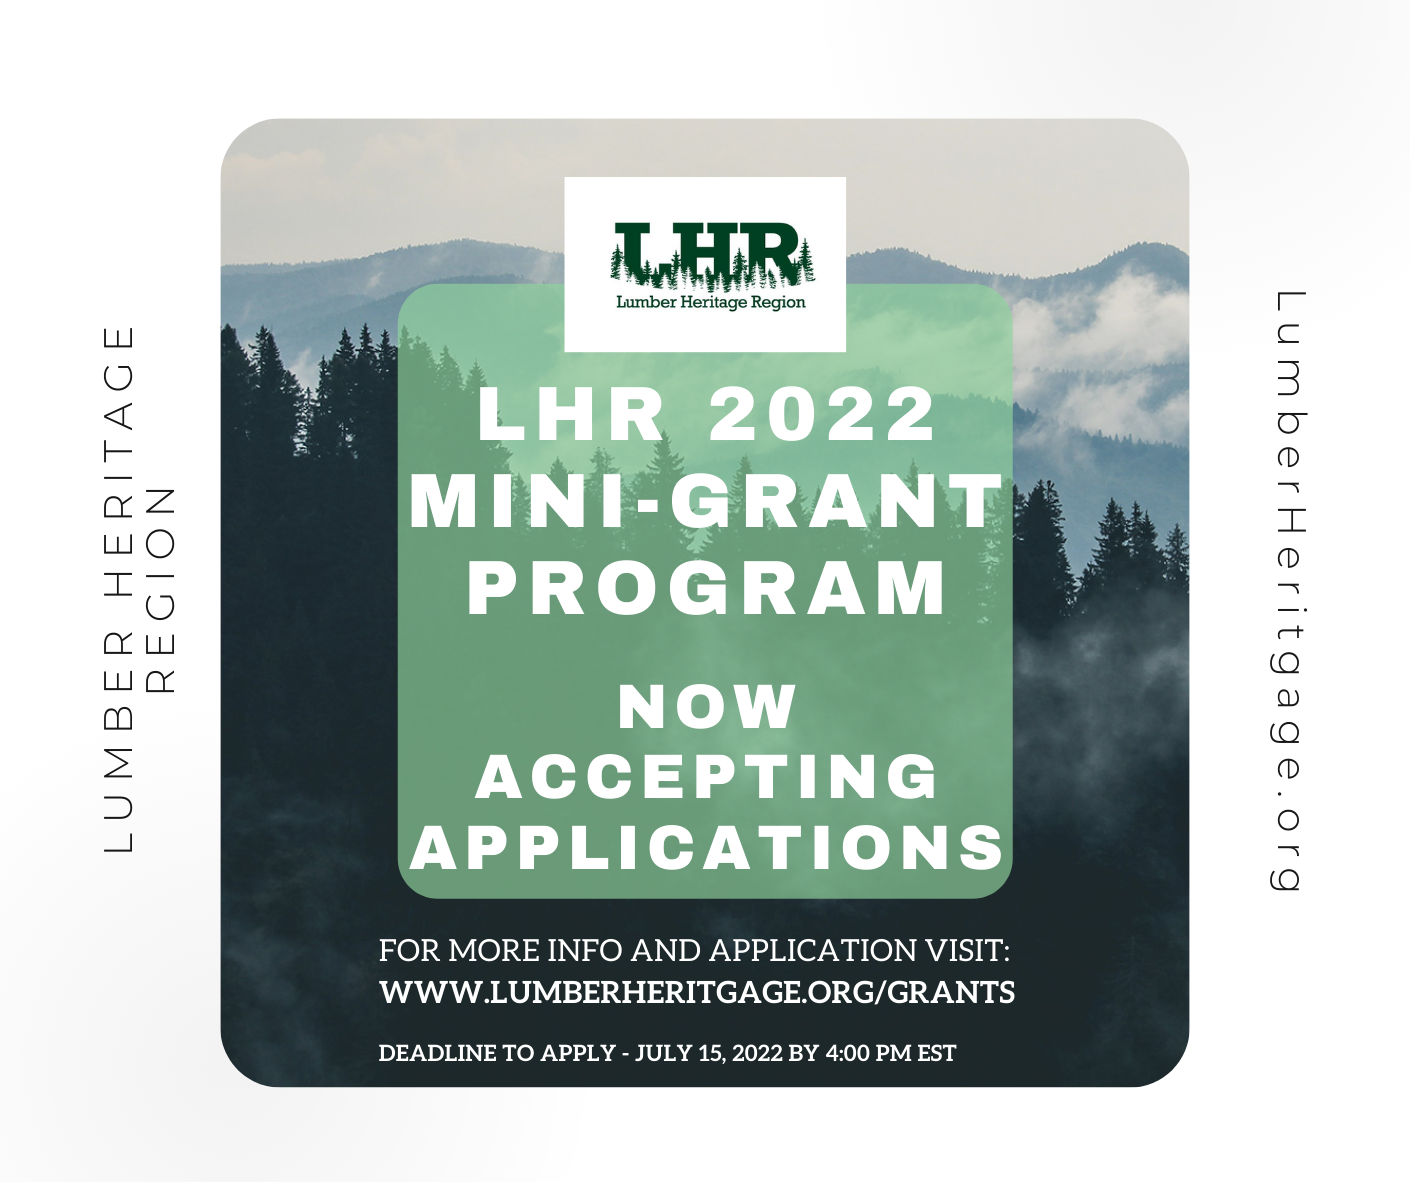 2022 Lhr Mini Grant Program Now Accepting Applications Lumber